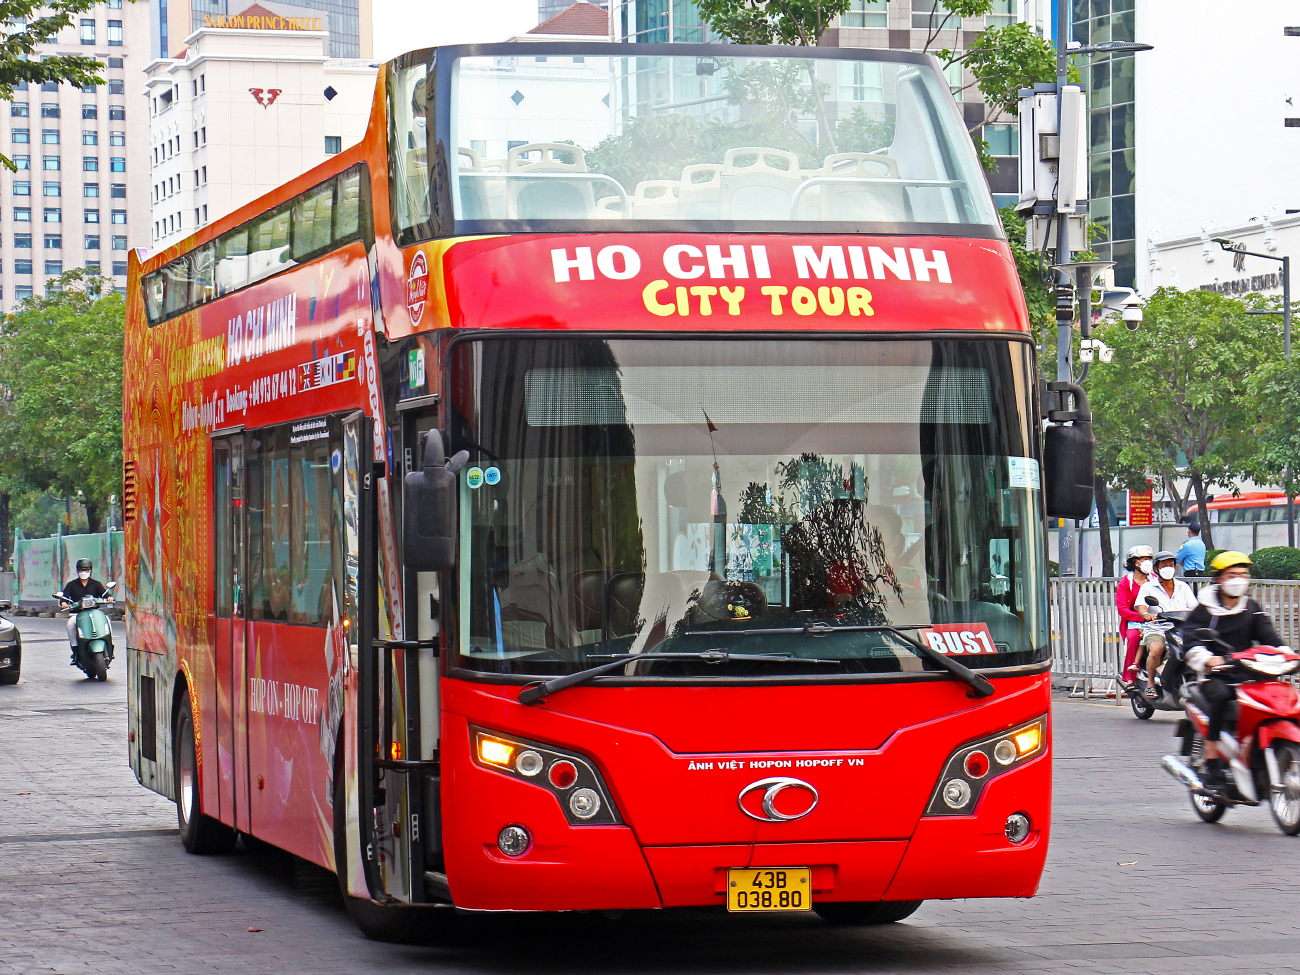 Ho Chi Minh City, Thaco TB120SS No. 43B-038.80